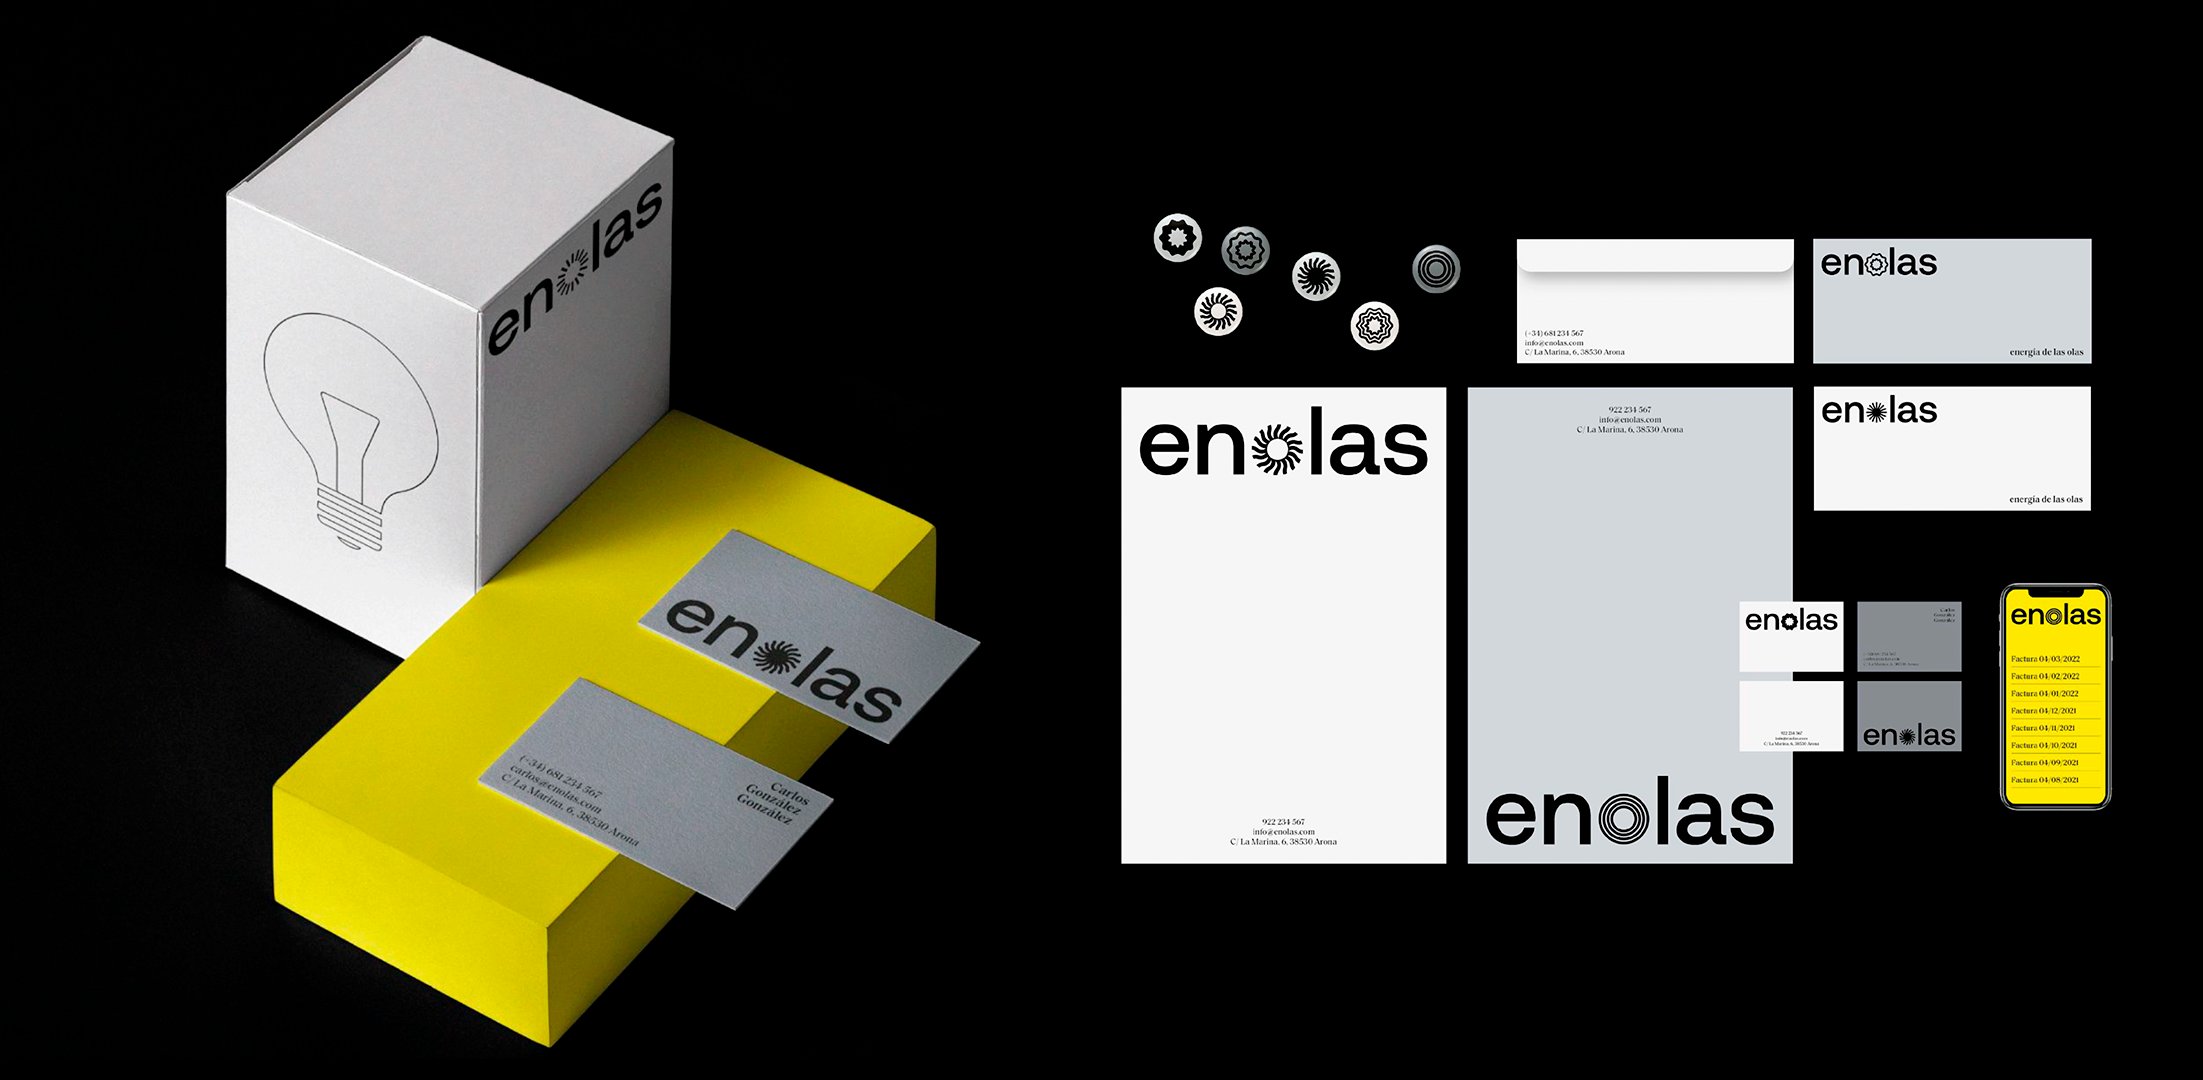 Enolas' project by Abenaura González